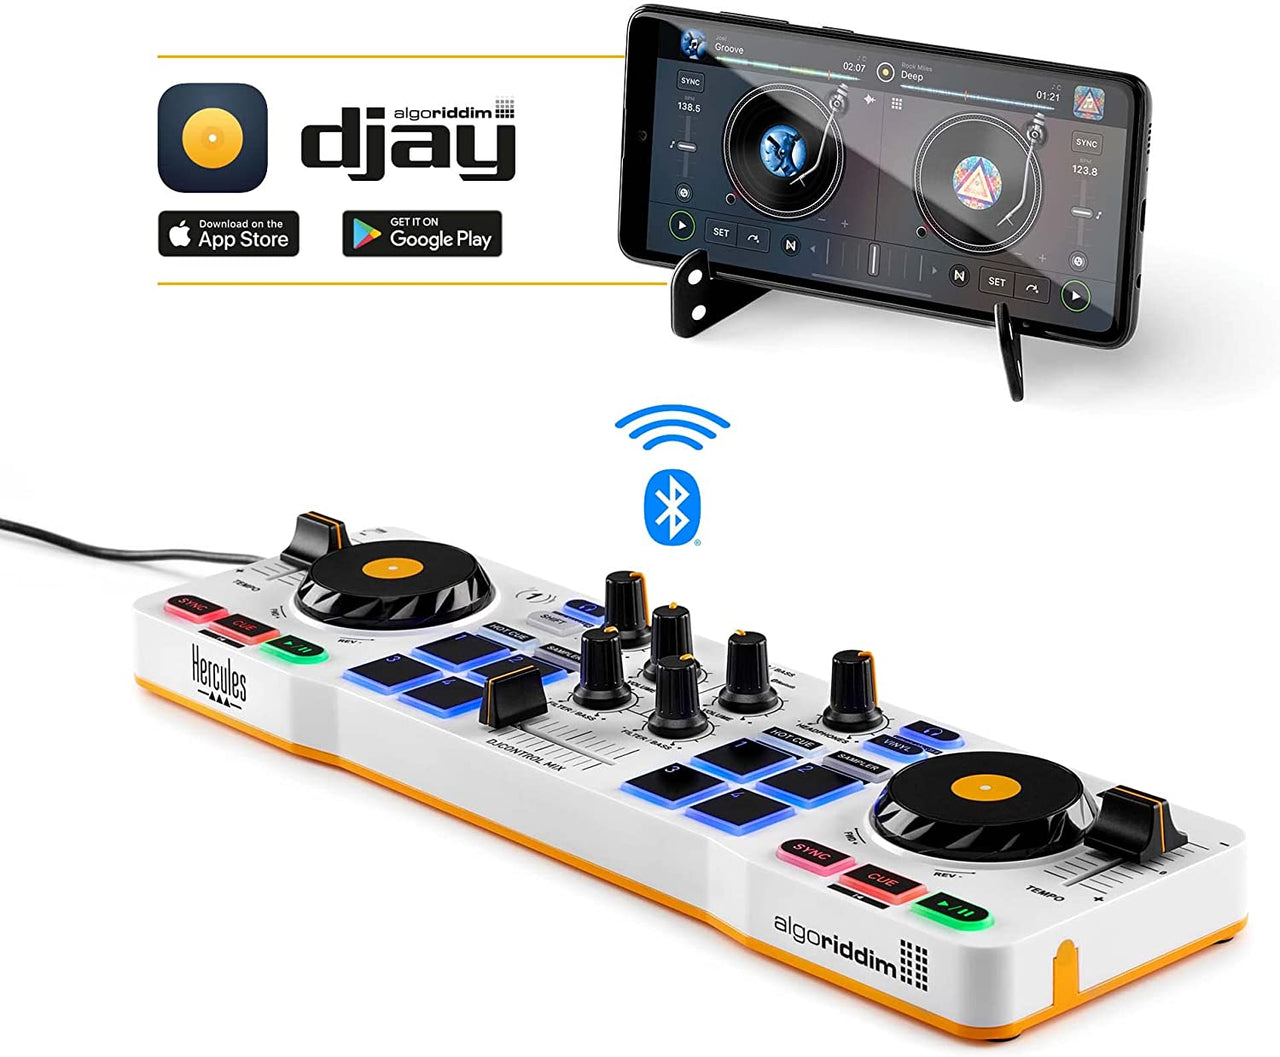 Hercules DJControl Mix Bluetooth Wireless DJ Controller Bundle with Headphone